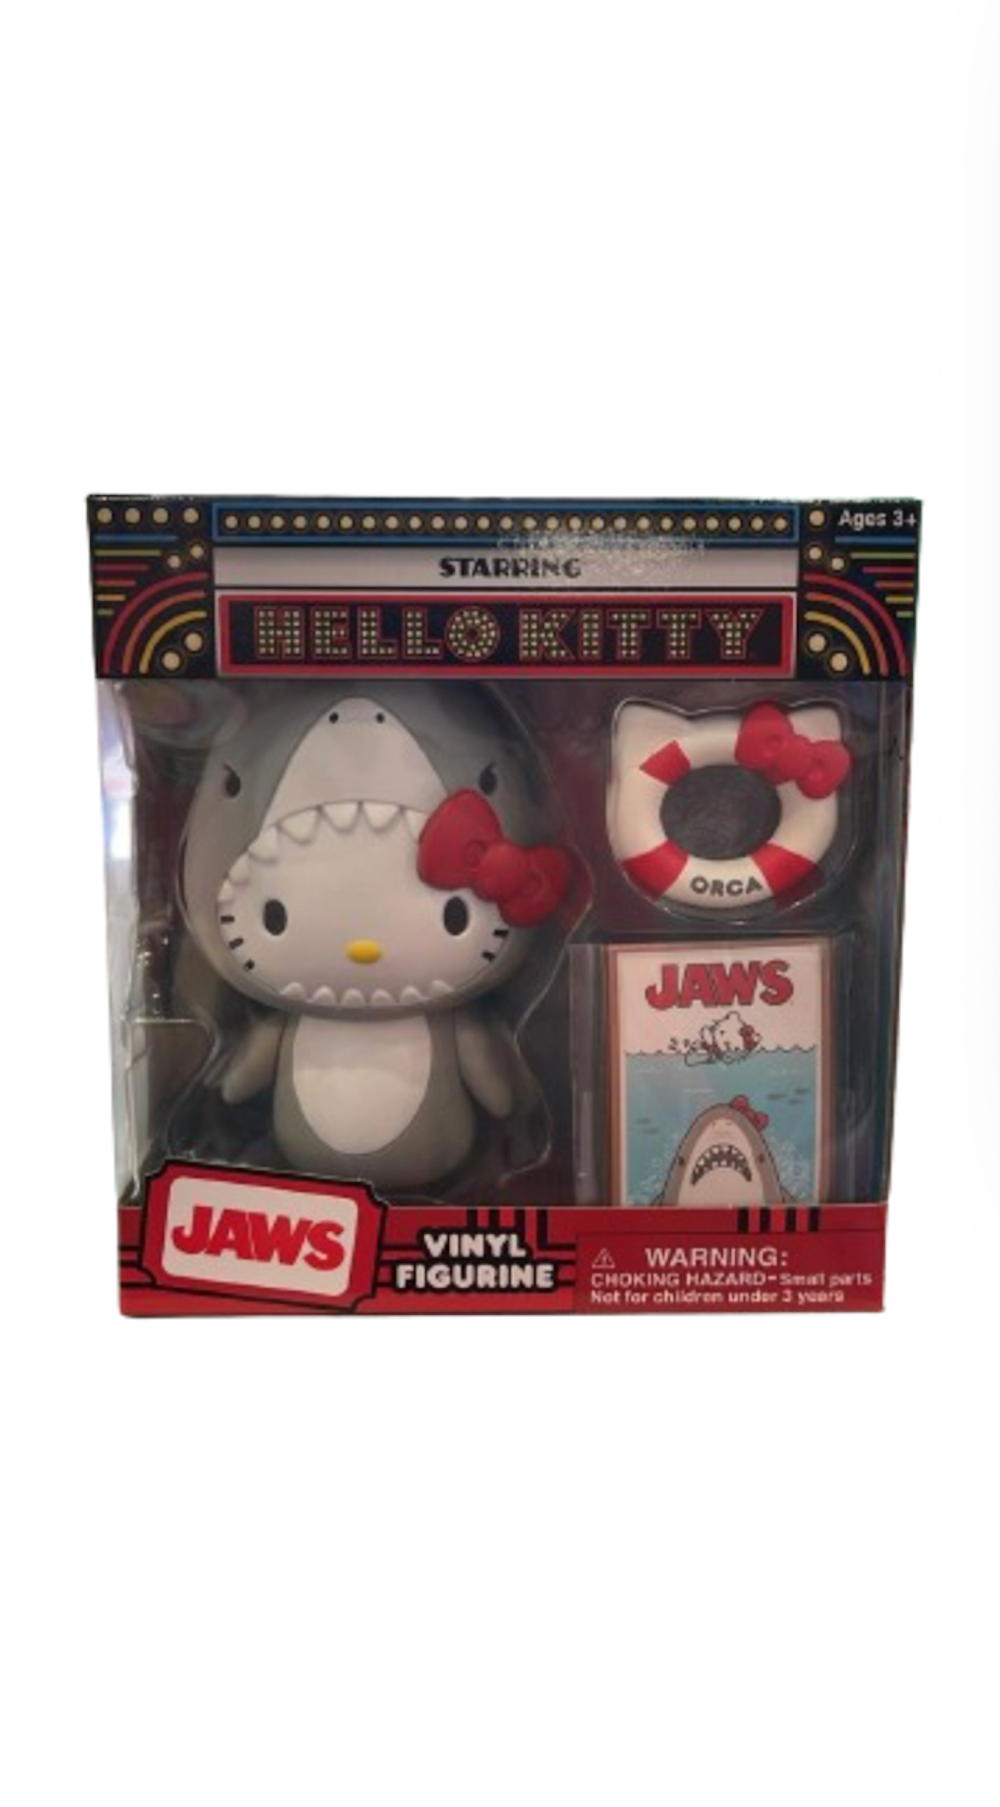 Universal Studios Hello Kitty in Jaws Costume Vinyl Figurine New with Box